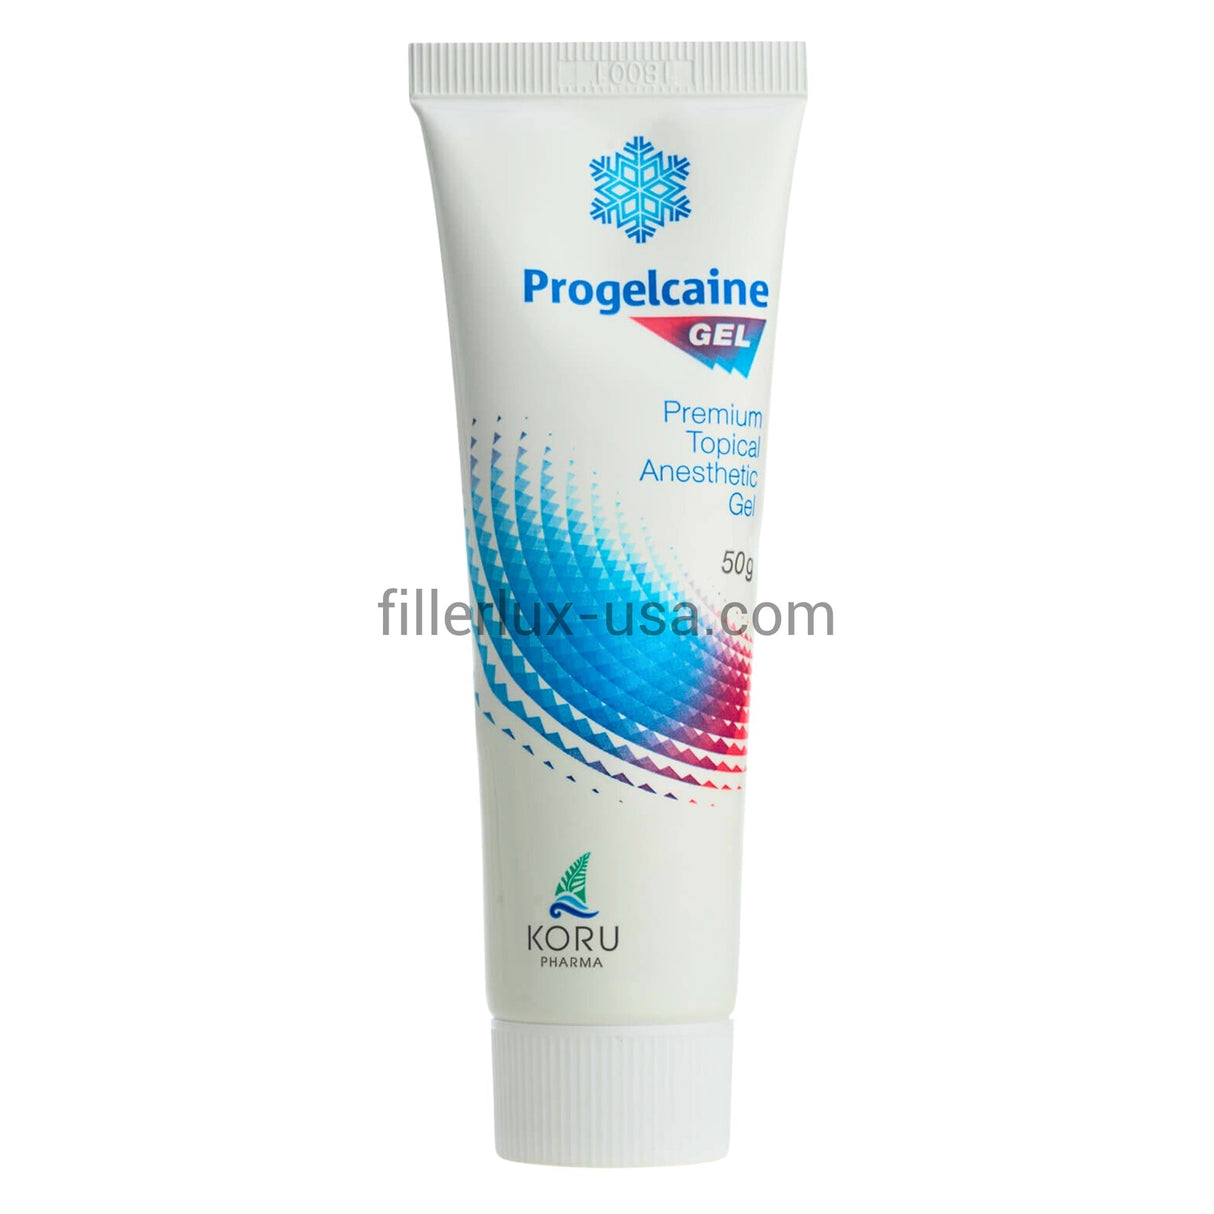 Progelcaine Lidocaine Gel - Filler Lux™ - Anesthetic Cream - Koru Pharmaceuticals Co., Ltd.